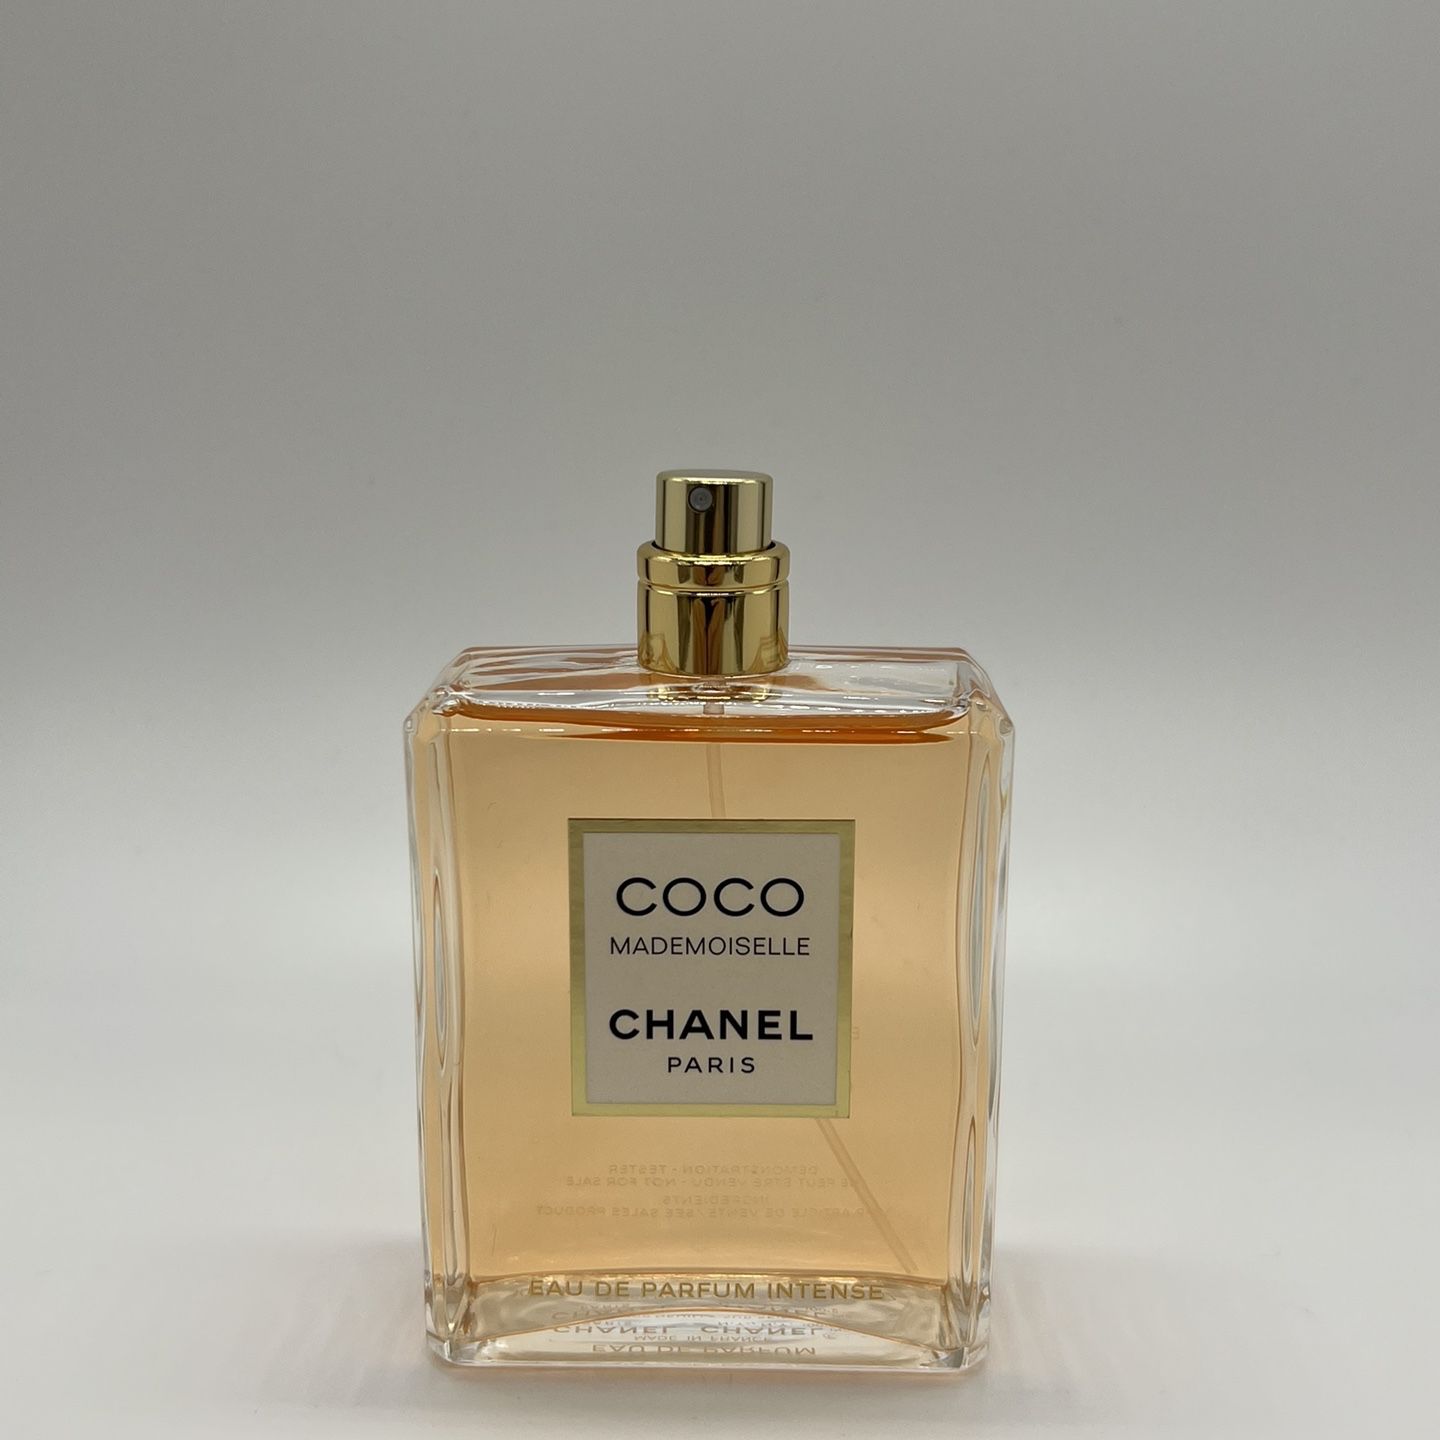 CHANEL COCO MADEMOISELLE Eau de Parfum 100ml New Perfume Sealed In Box for  Sale in Everett, WA - OfferUp